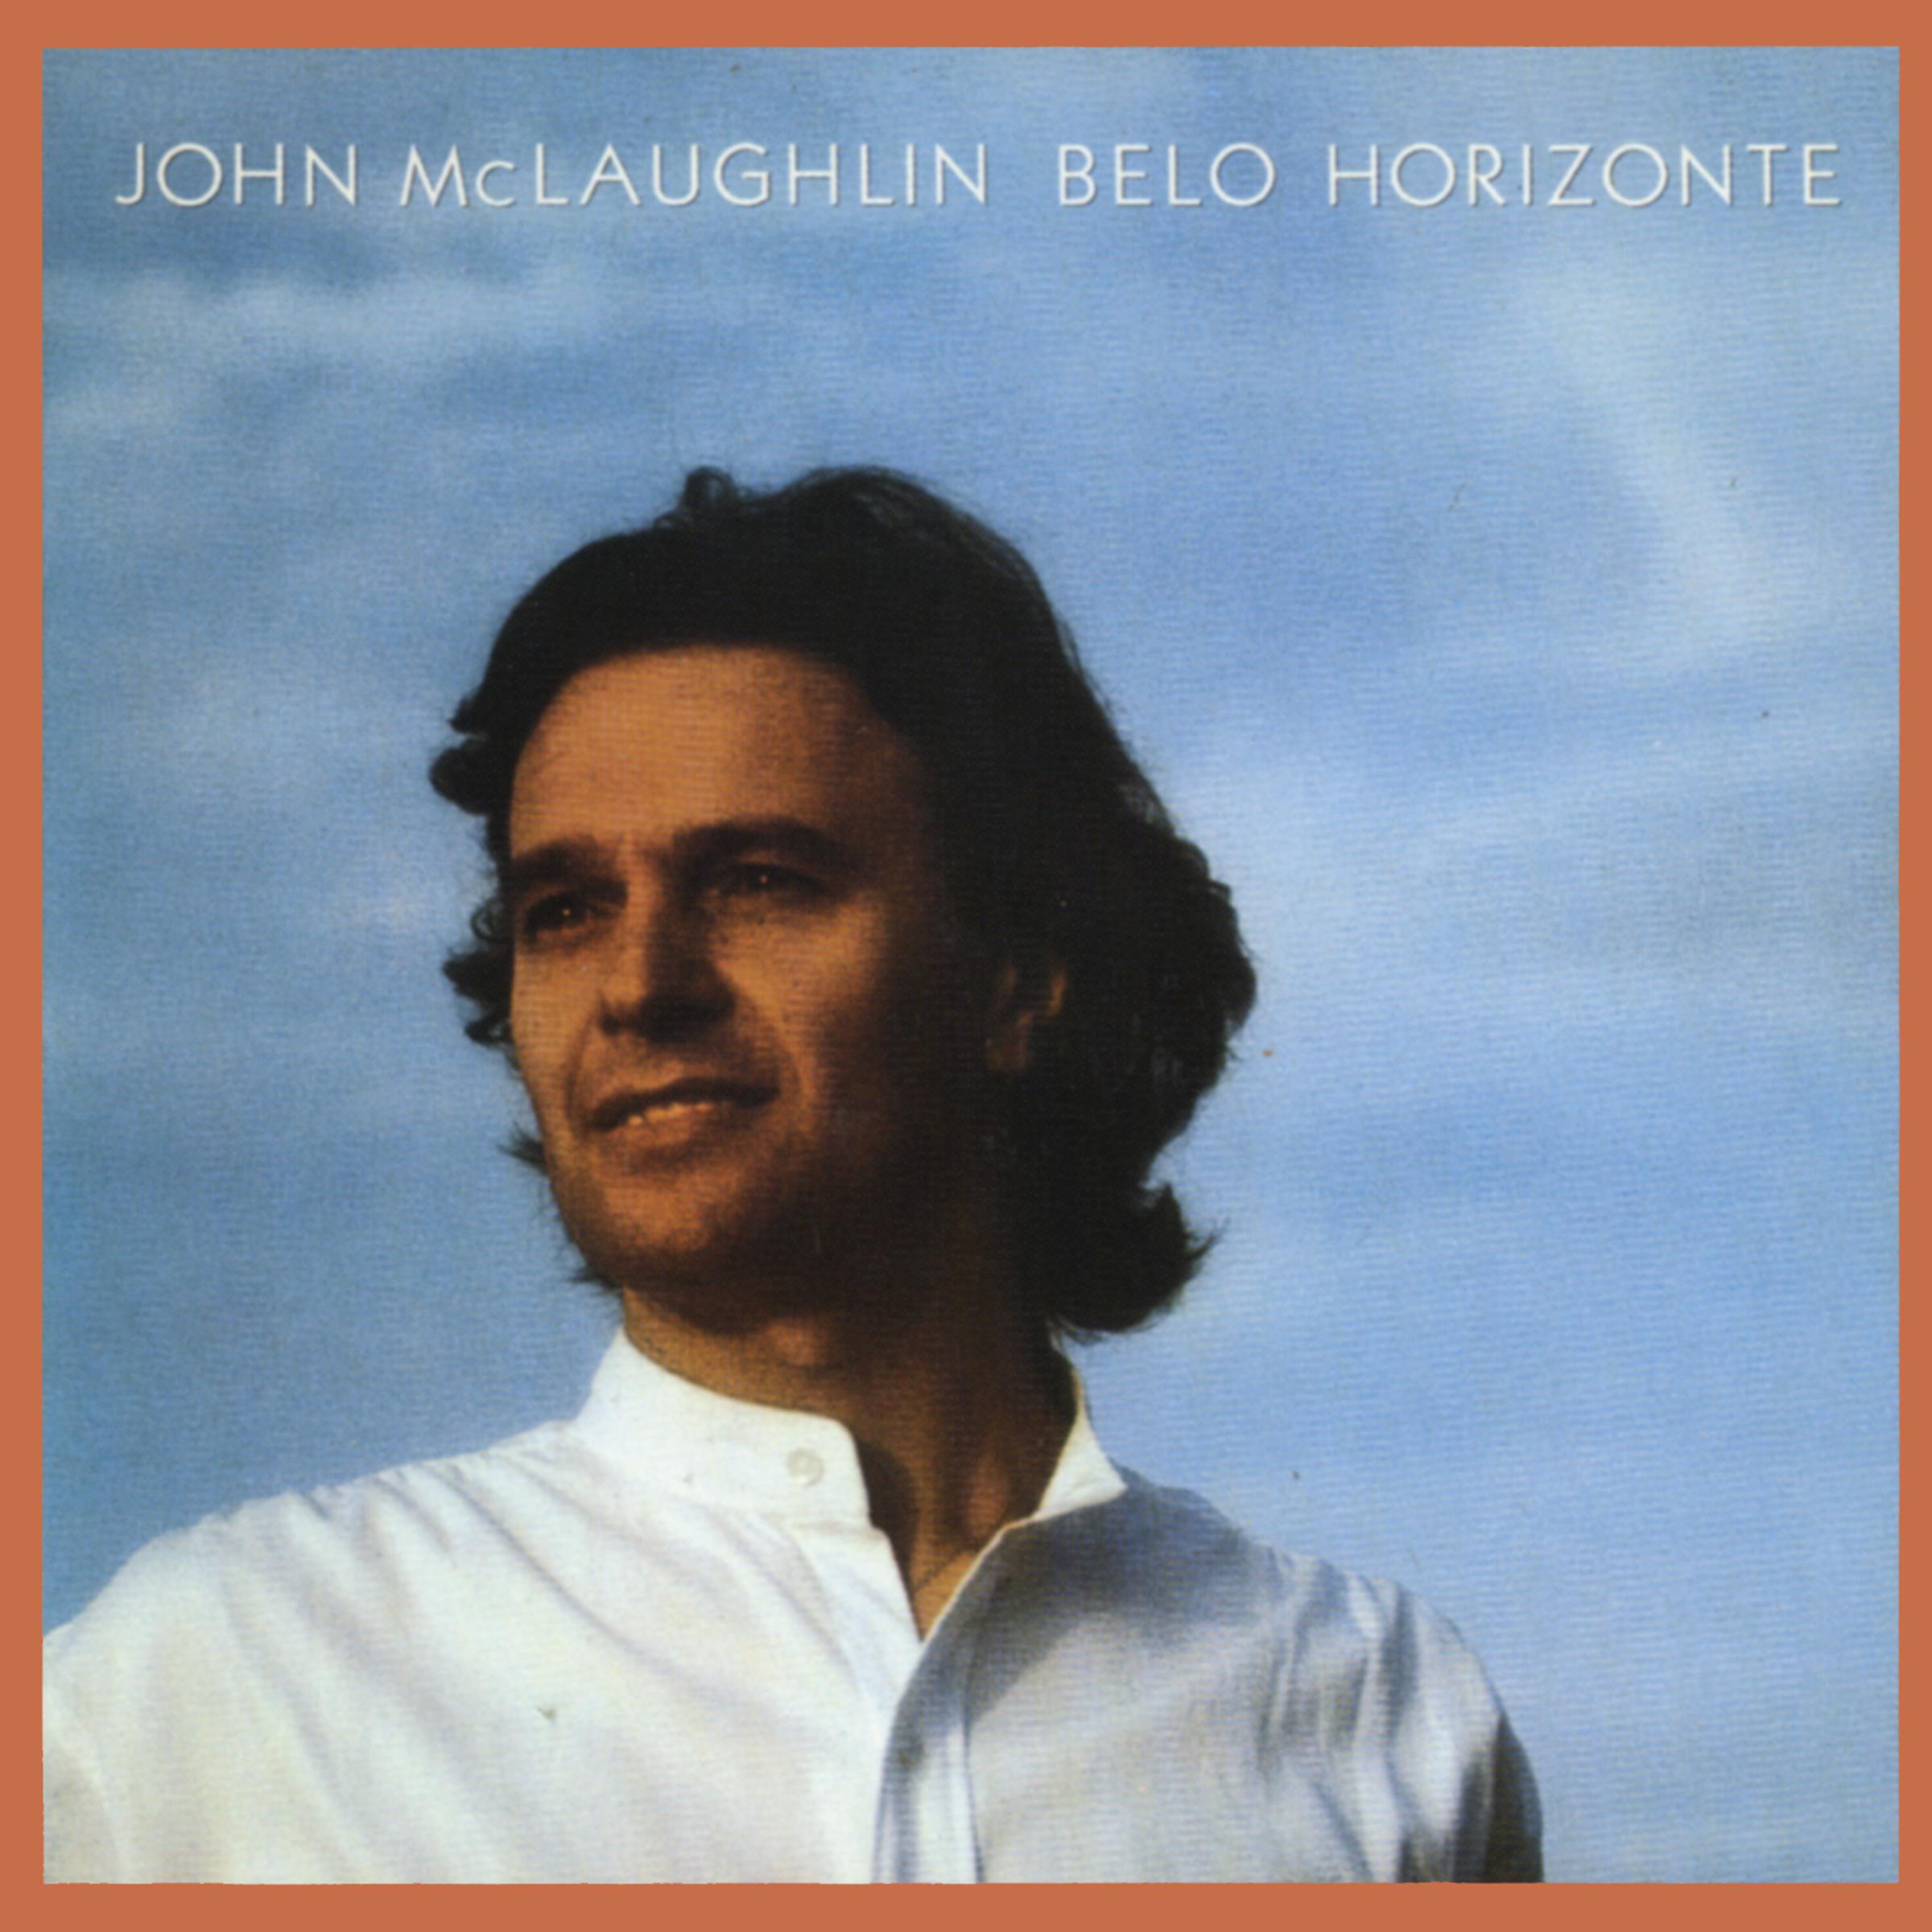 John McLaughlin - One Melody